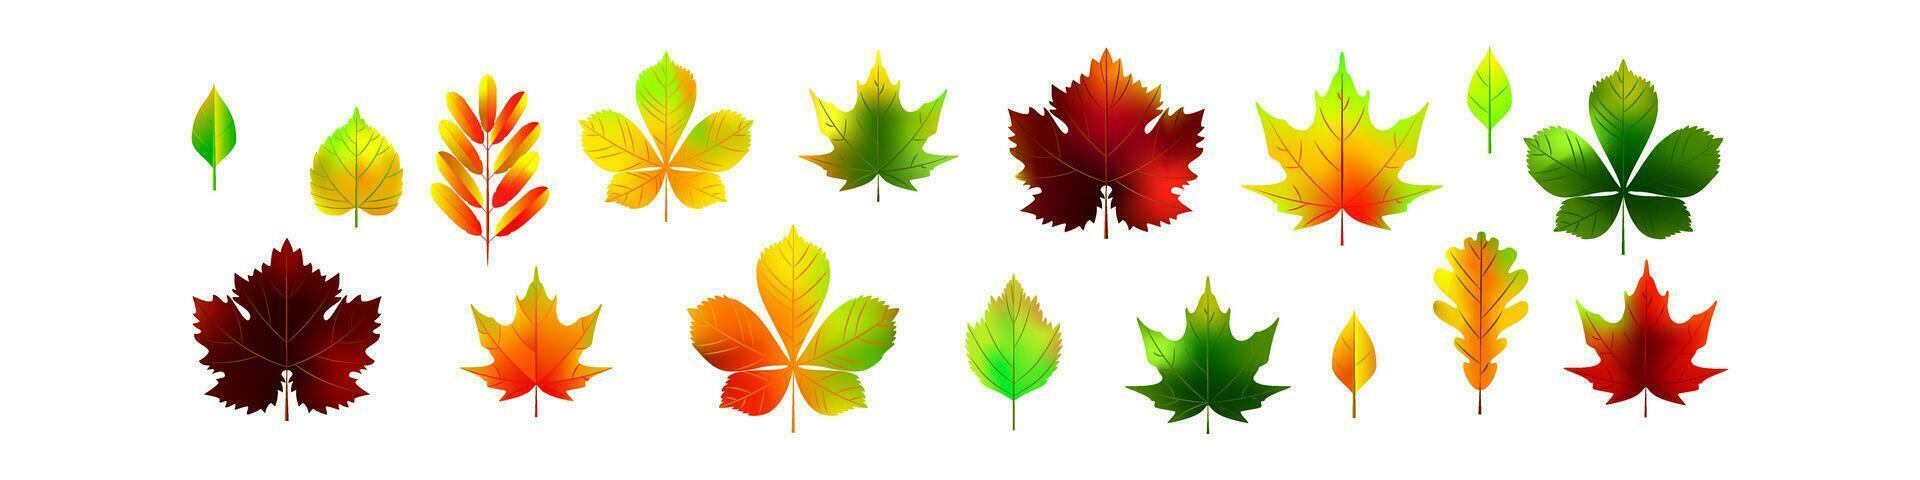 Autumn leaves isolated on white background. Realistic botanical vector illustration. Fall colorful foliage